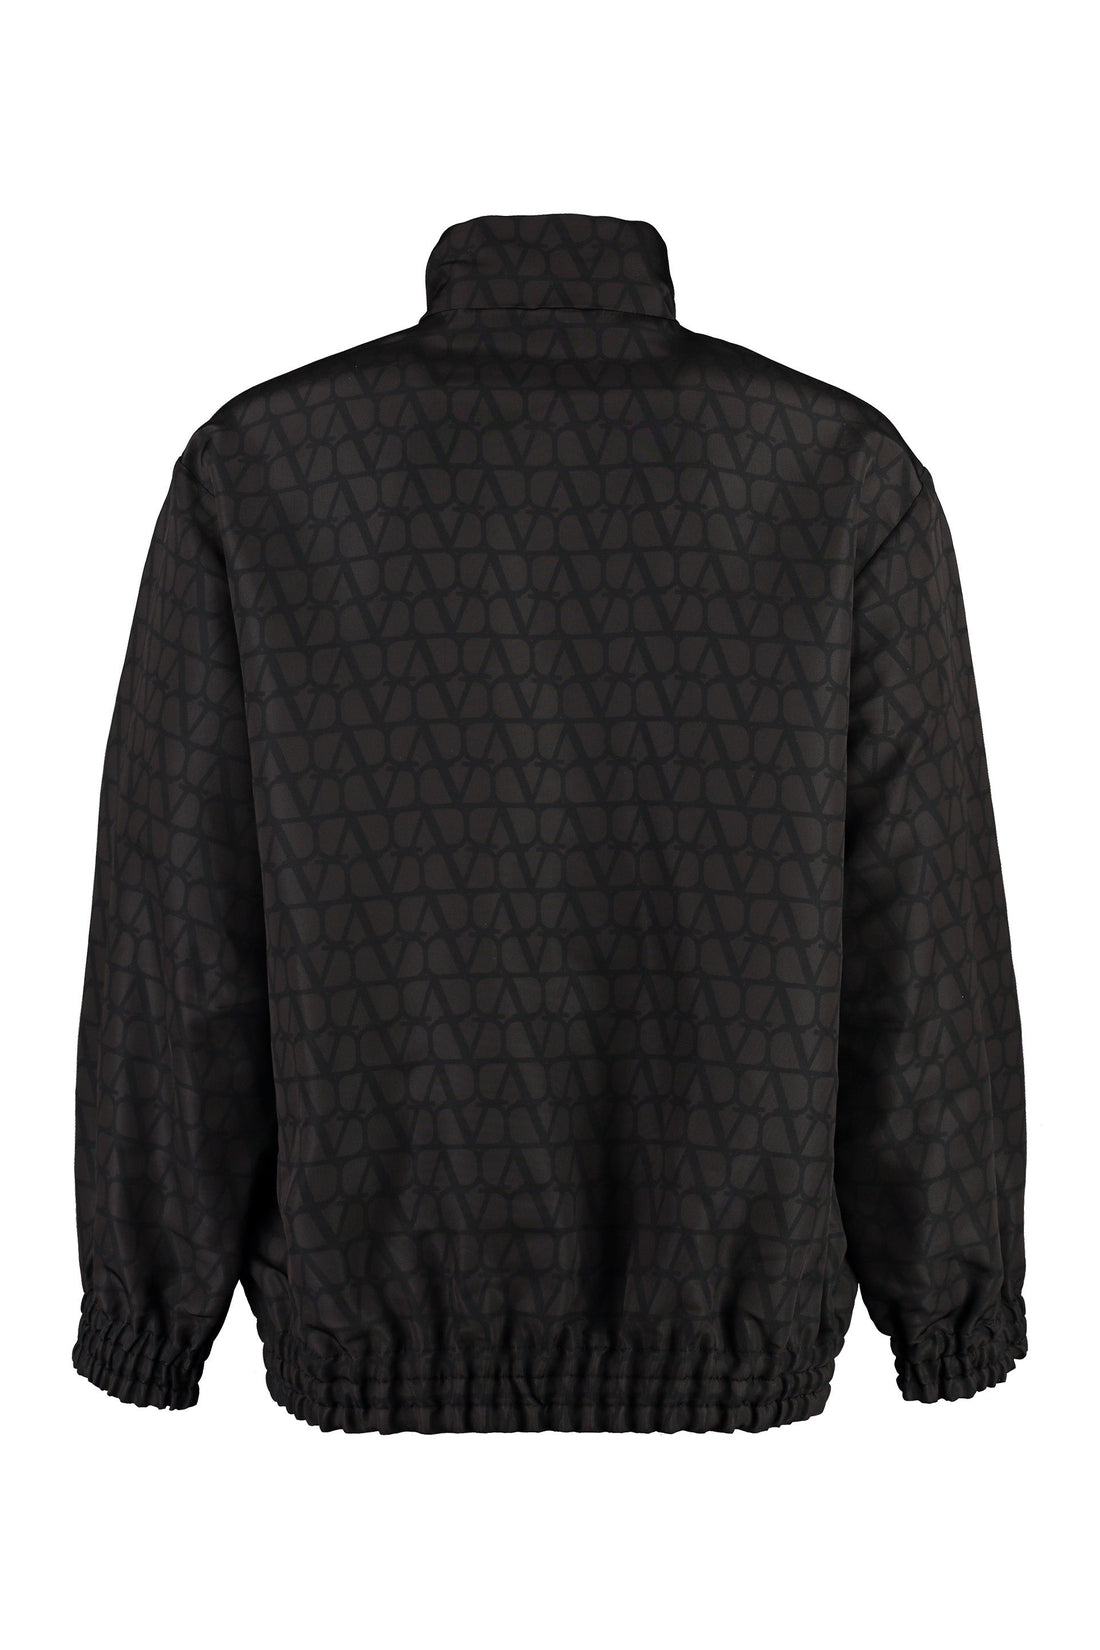 Valentino-OUTLET-SALE-Silk jacket-ARCHIVIST